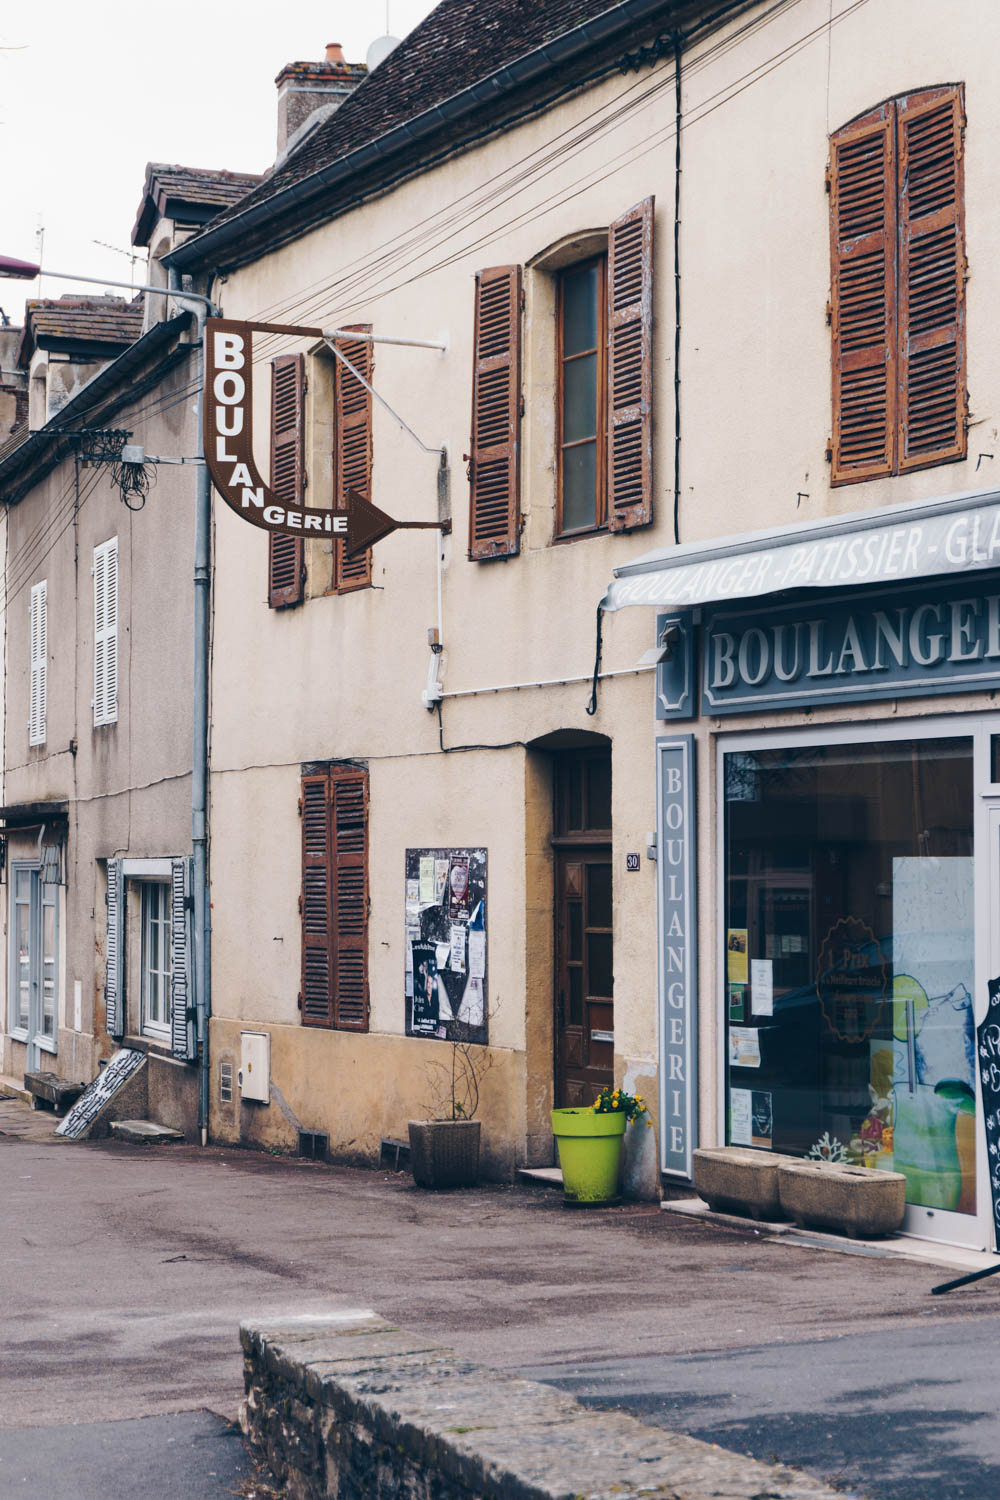 Boulangerie, Burgundy France - French Countryside - RG Daily Blog